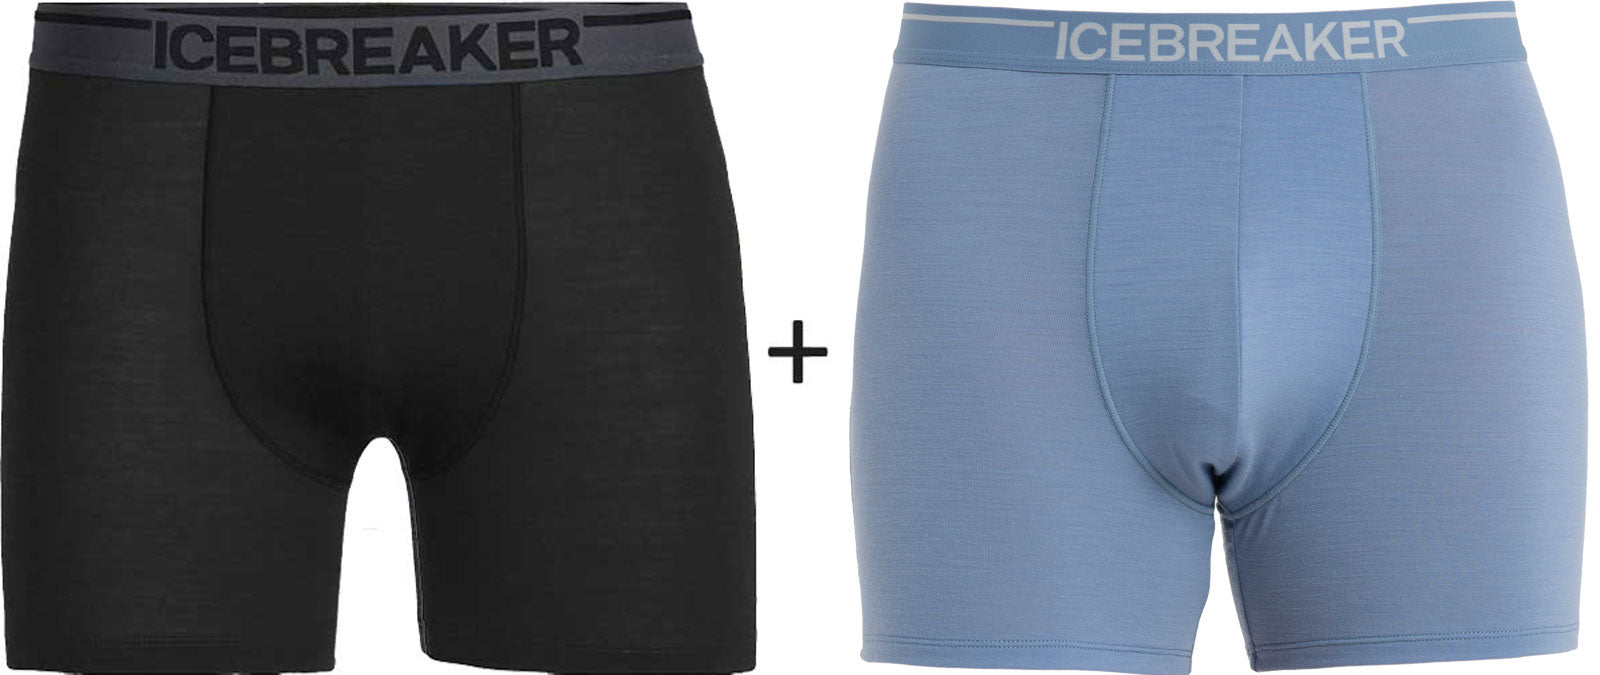 Men's Icebreaker Anatomica Boxer Briefs TWIN PACK {IC-103029-TWIN} —  Baselayer Ltd